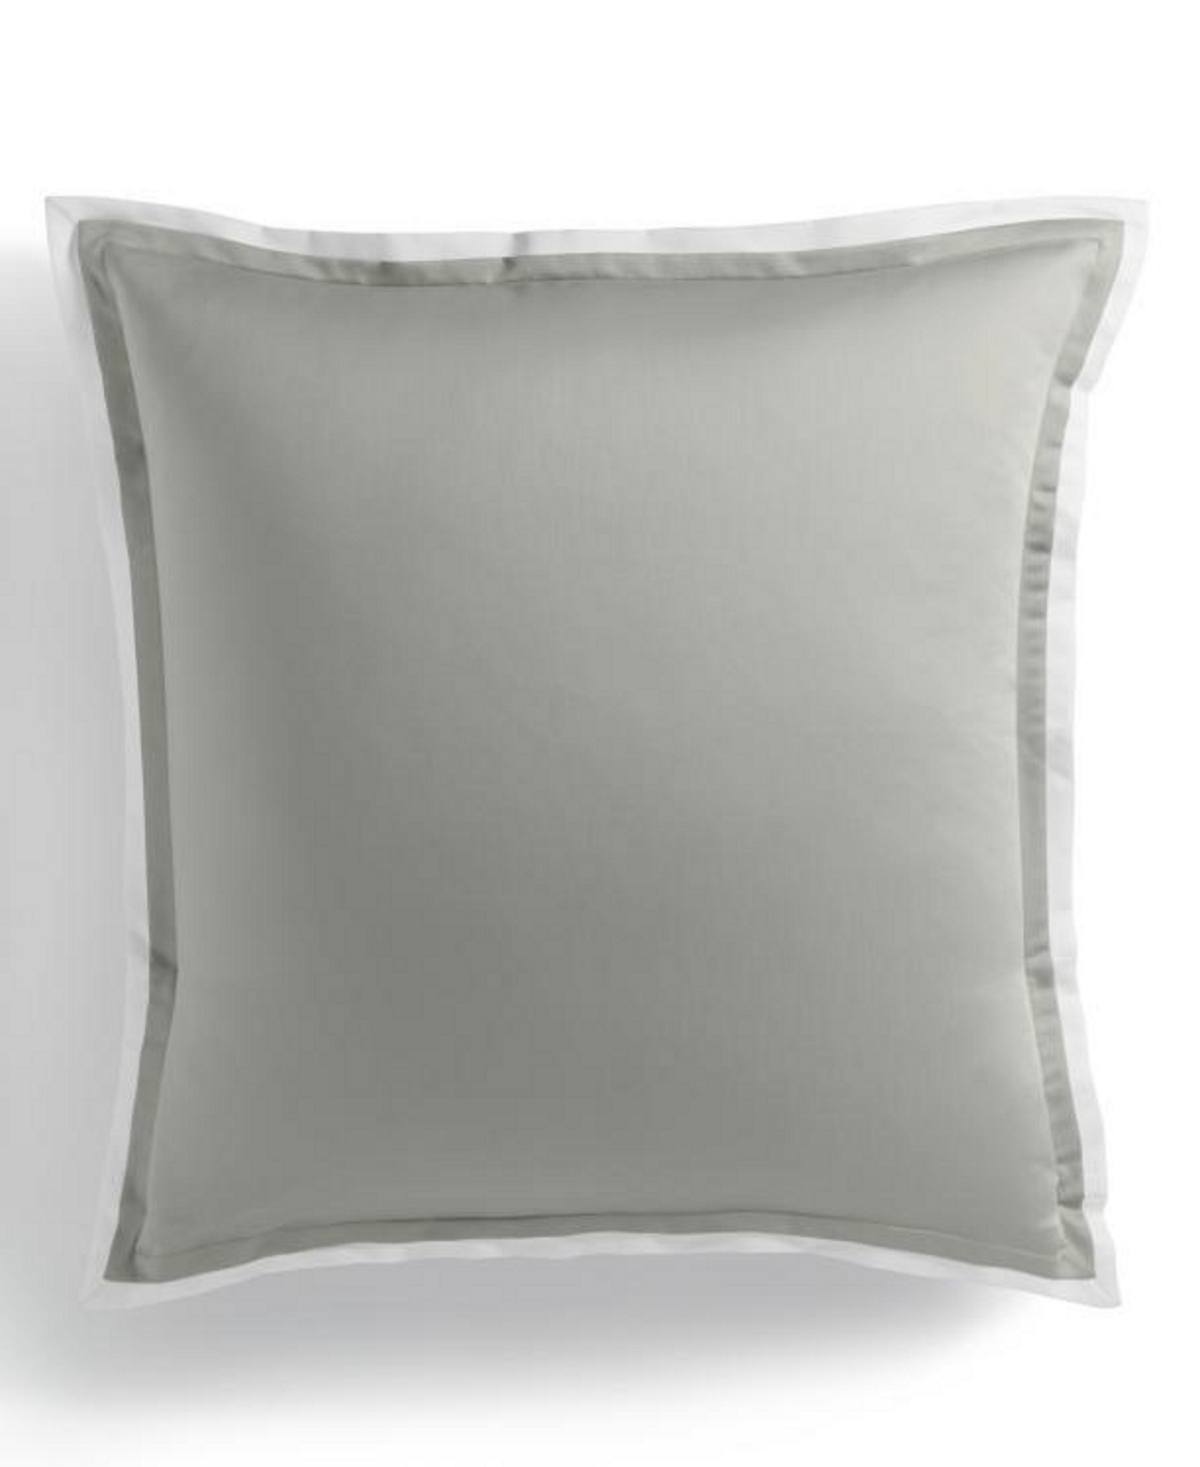 Sleep Luxe 800 Thread Count 100% Cotton Sham, European, Created for Macy's - Charcoal